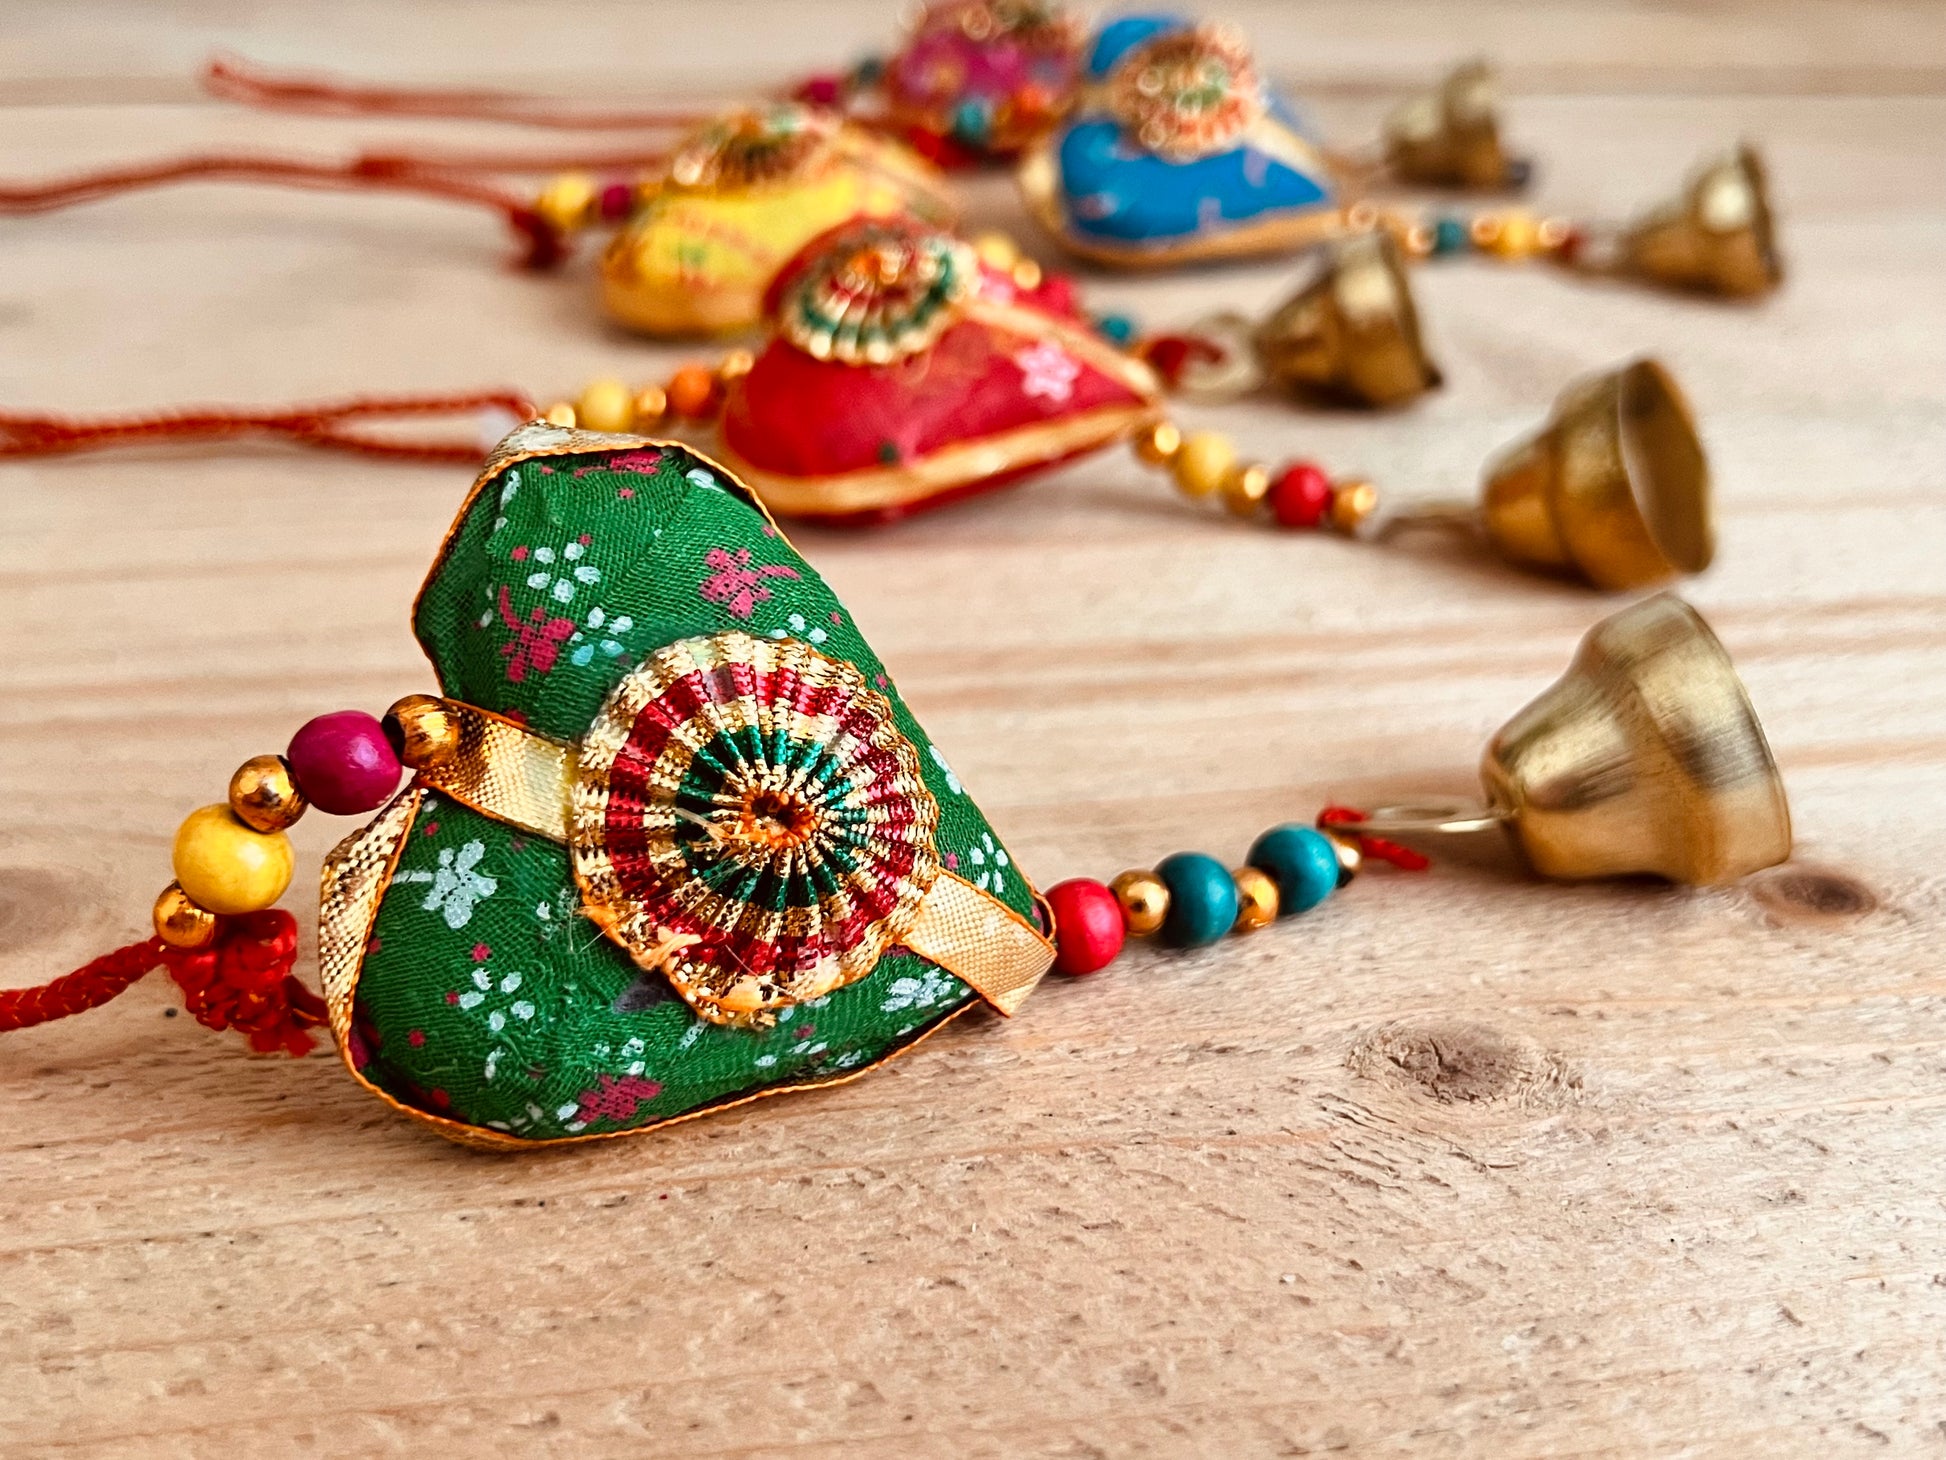 Handmade & Fair Trade Fabric Heart Bell In Recycled Sari Material Hippie Bohemian Decor